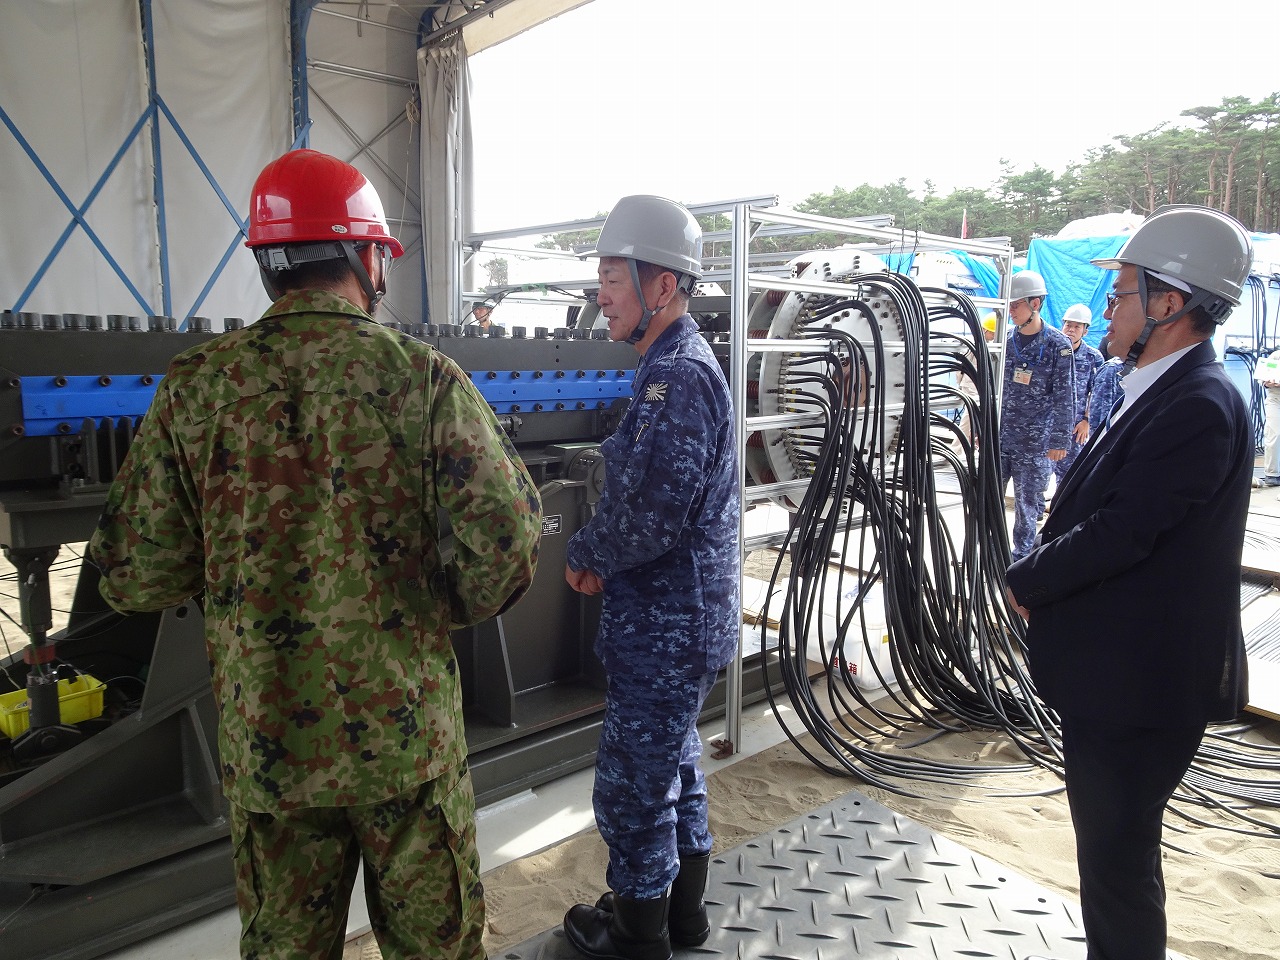 Vice Admiral SAITO Akira, visited the Shimokita Test Center of the ATLA to inspect the current status of EM railgun.